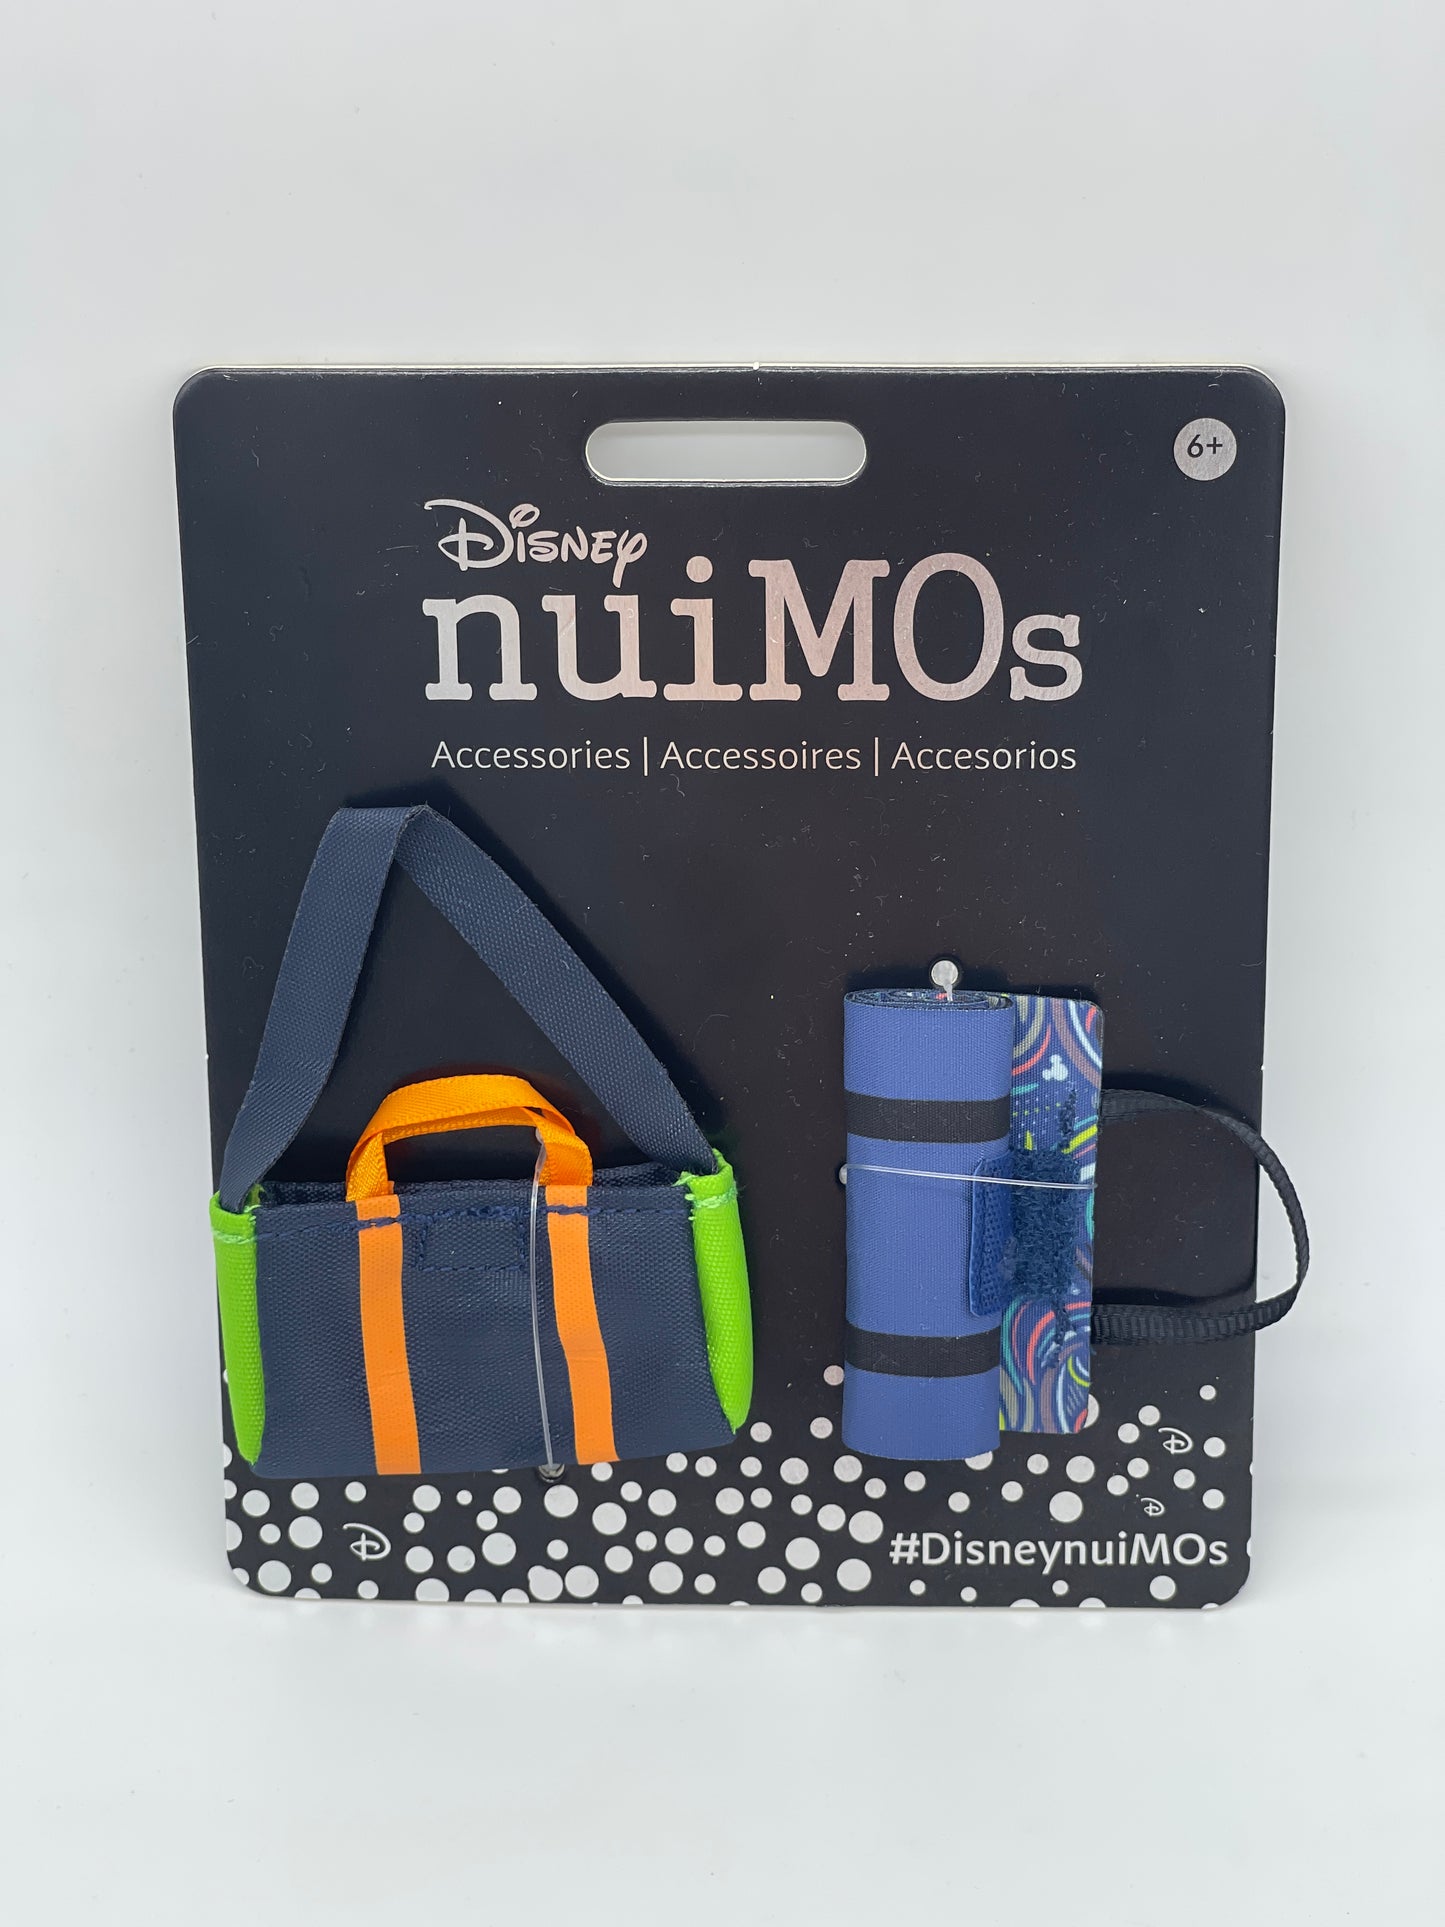 Disney nuiMOs Accessoires "Sporttasche & Yogamatte" #DisneynuiMOs